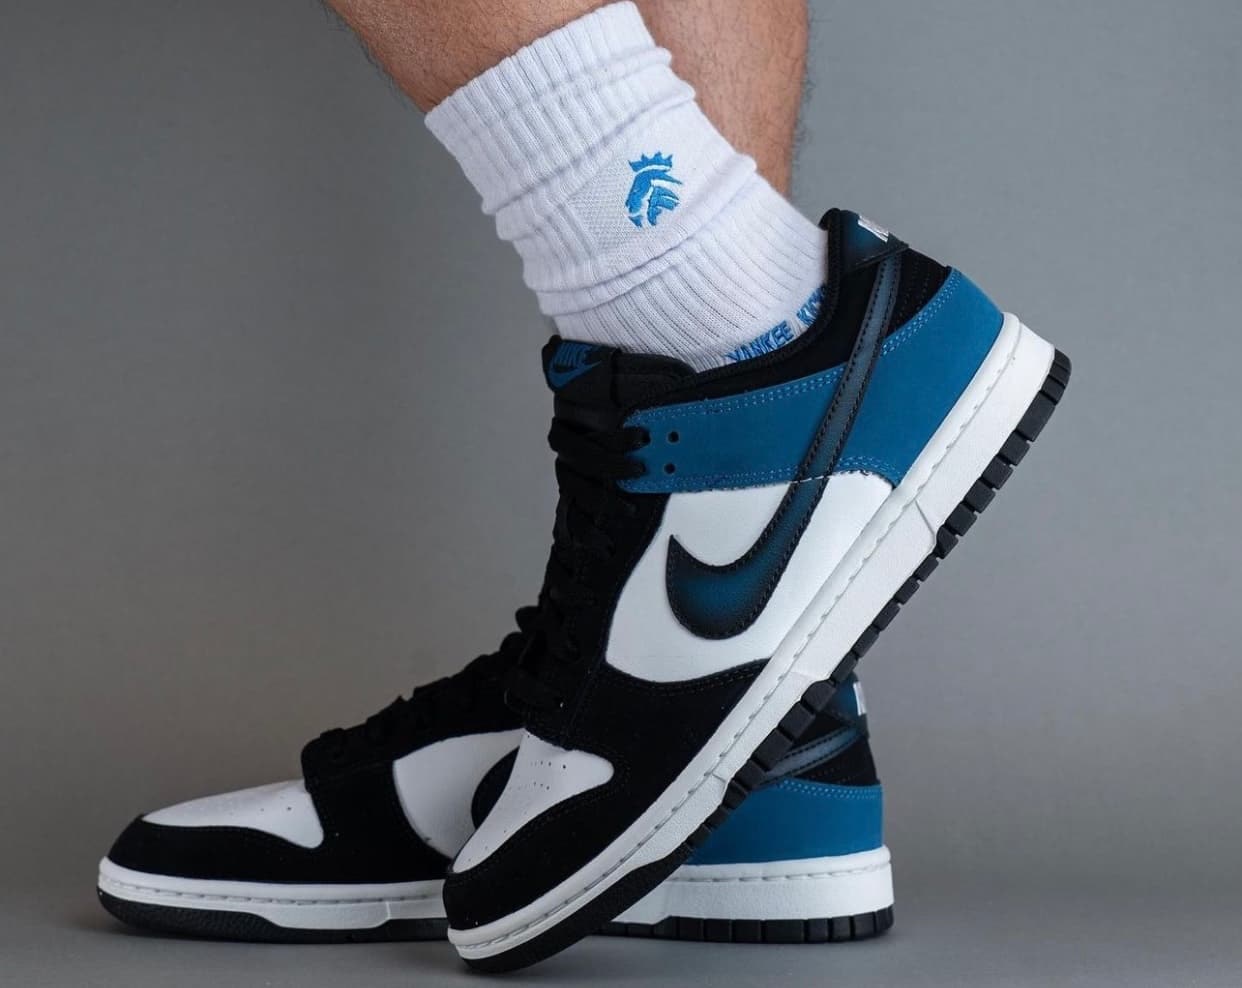 Nike Dunk Low "Industrial Blue"